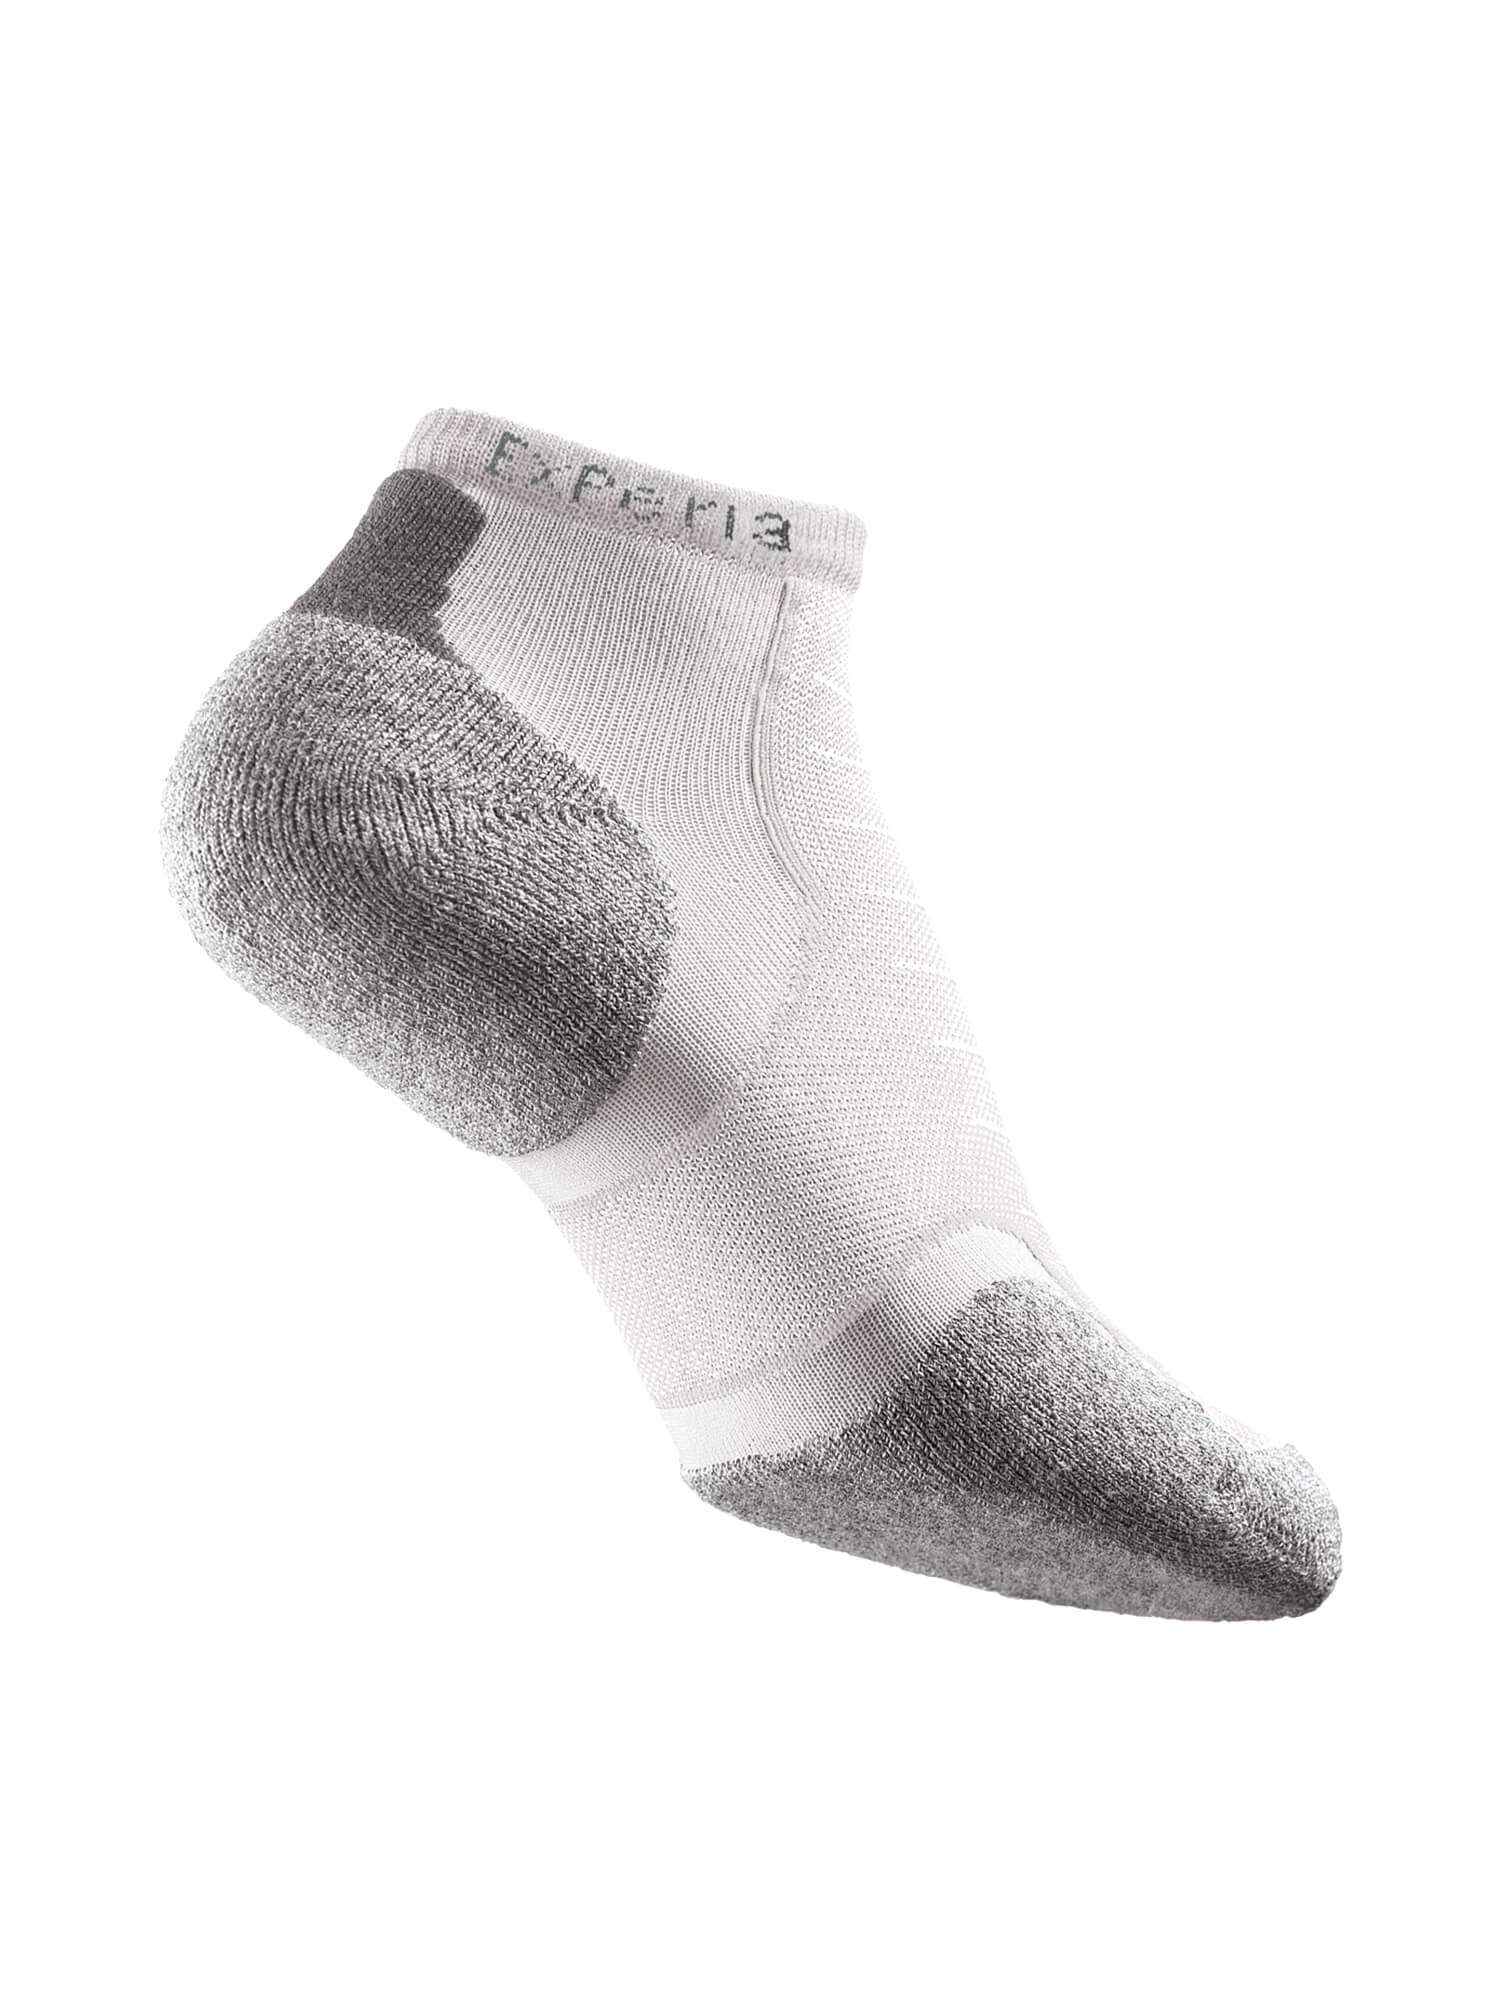 White and grey Thorlos Experia Coolmax Micro Mini Padded Running Socks